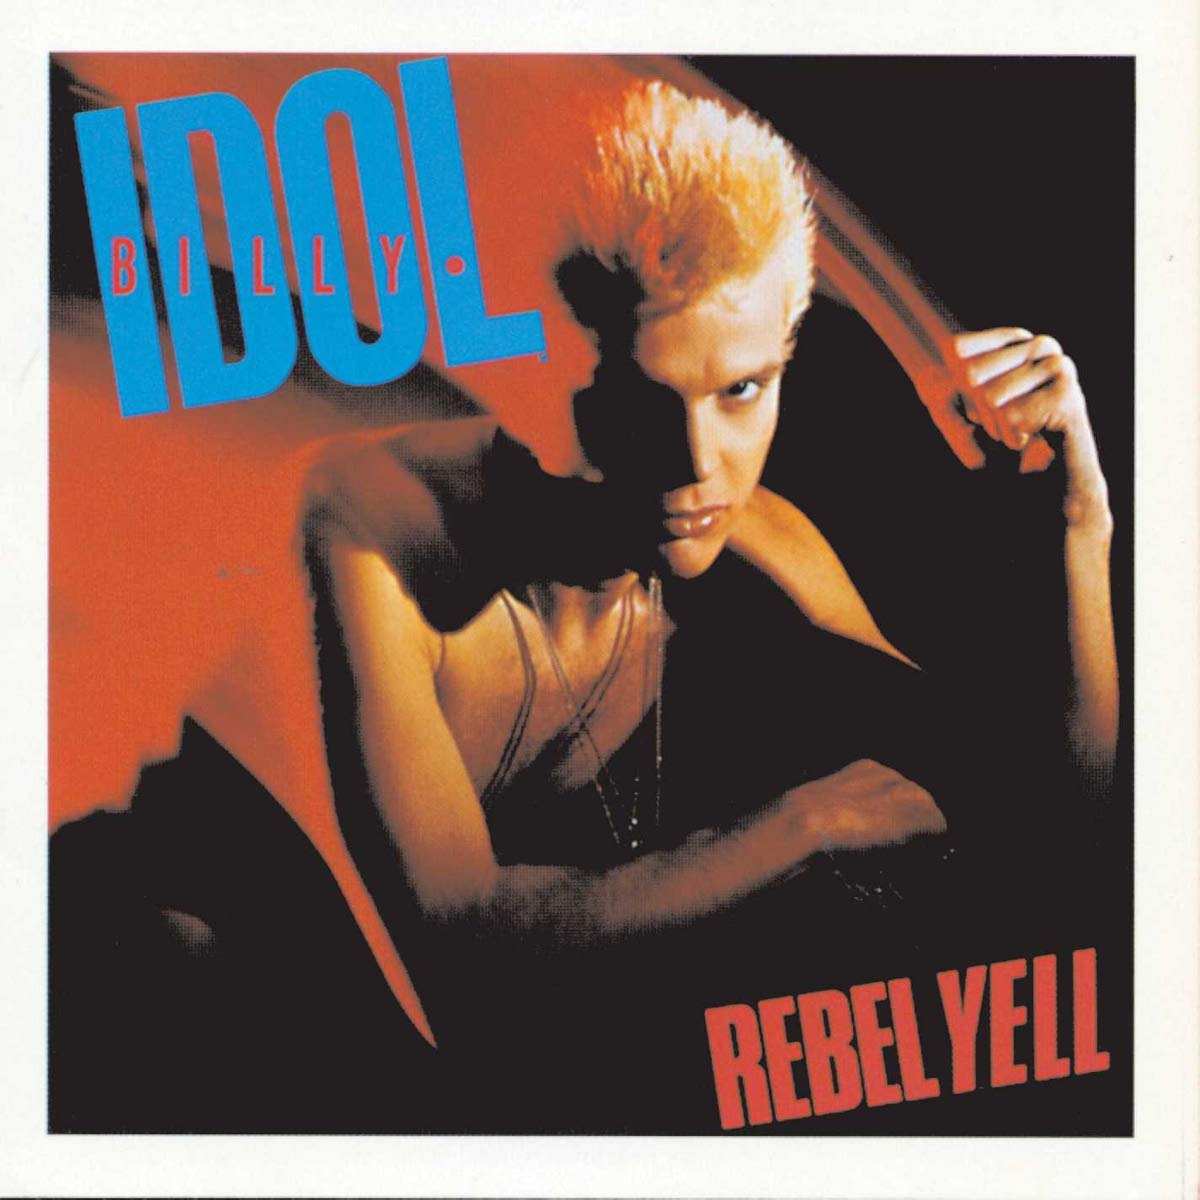 Billy Idol - Rebel Yell (Extended version)